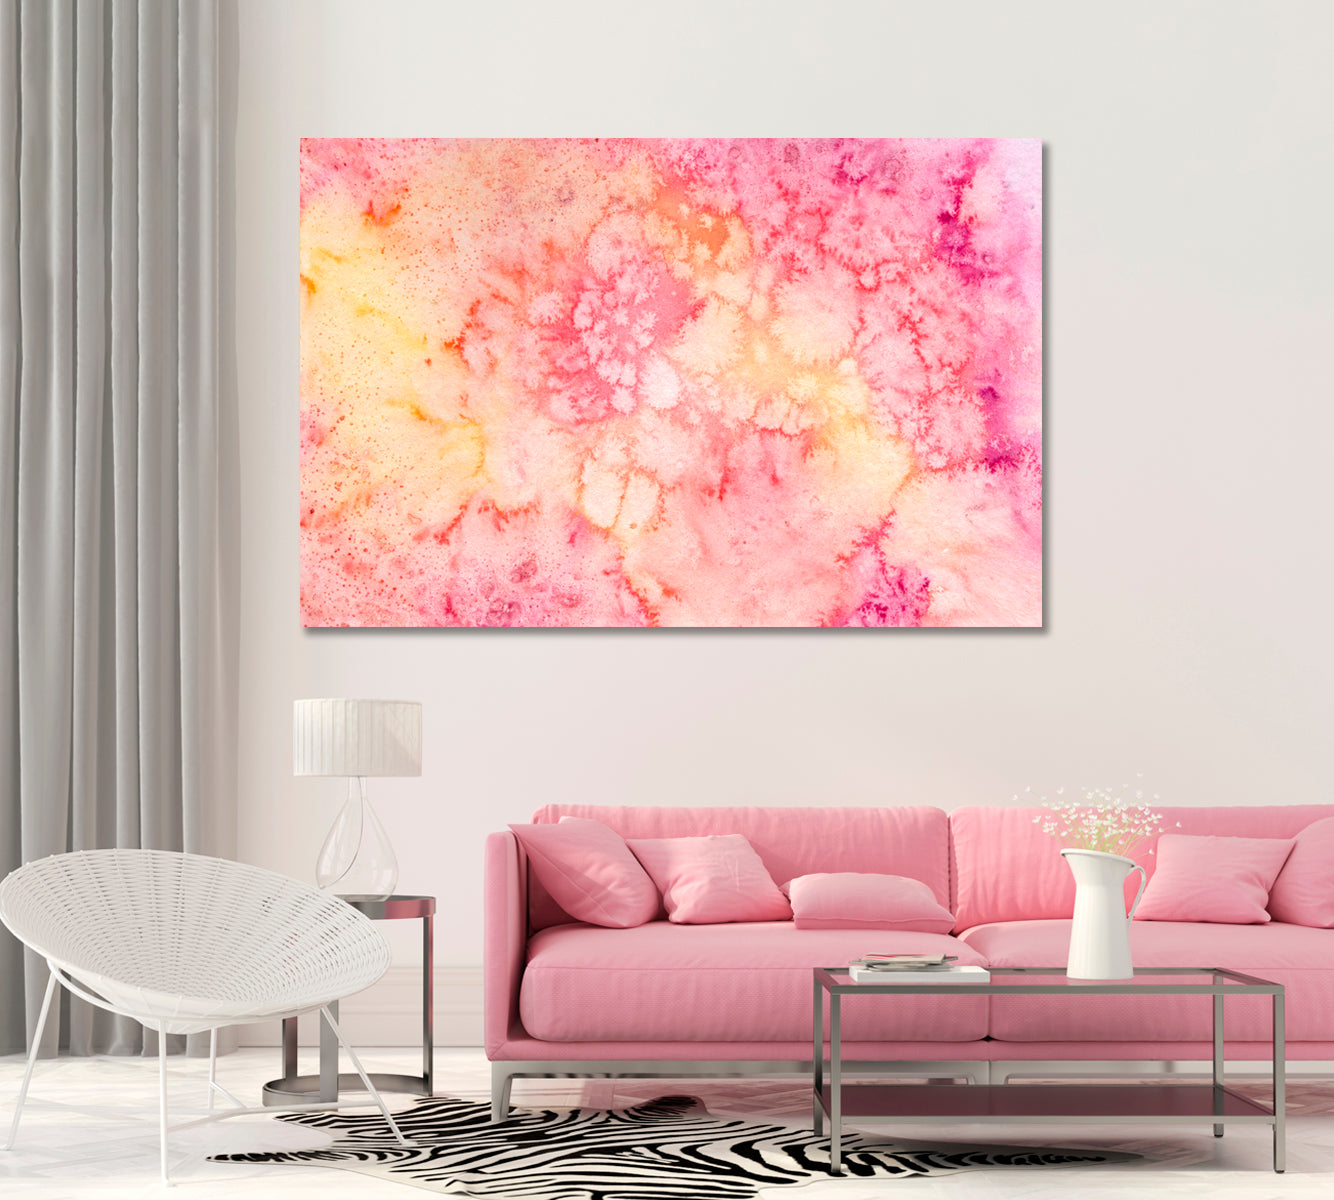 Abstract Pink Watercolor Pattern Canvas Print-Canvas Print-CetArt-1 Panel-24x16 inches-CetArt